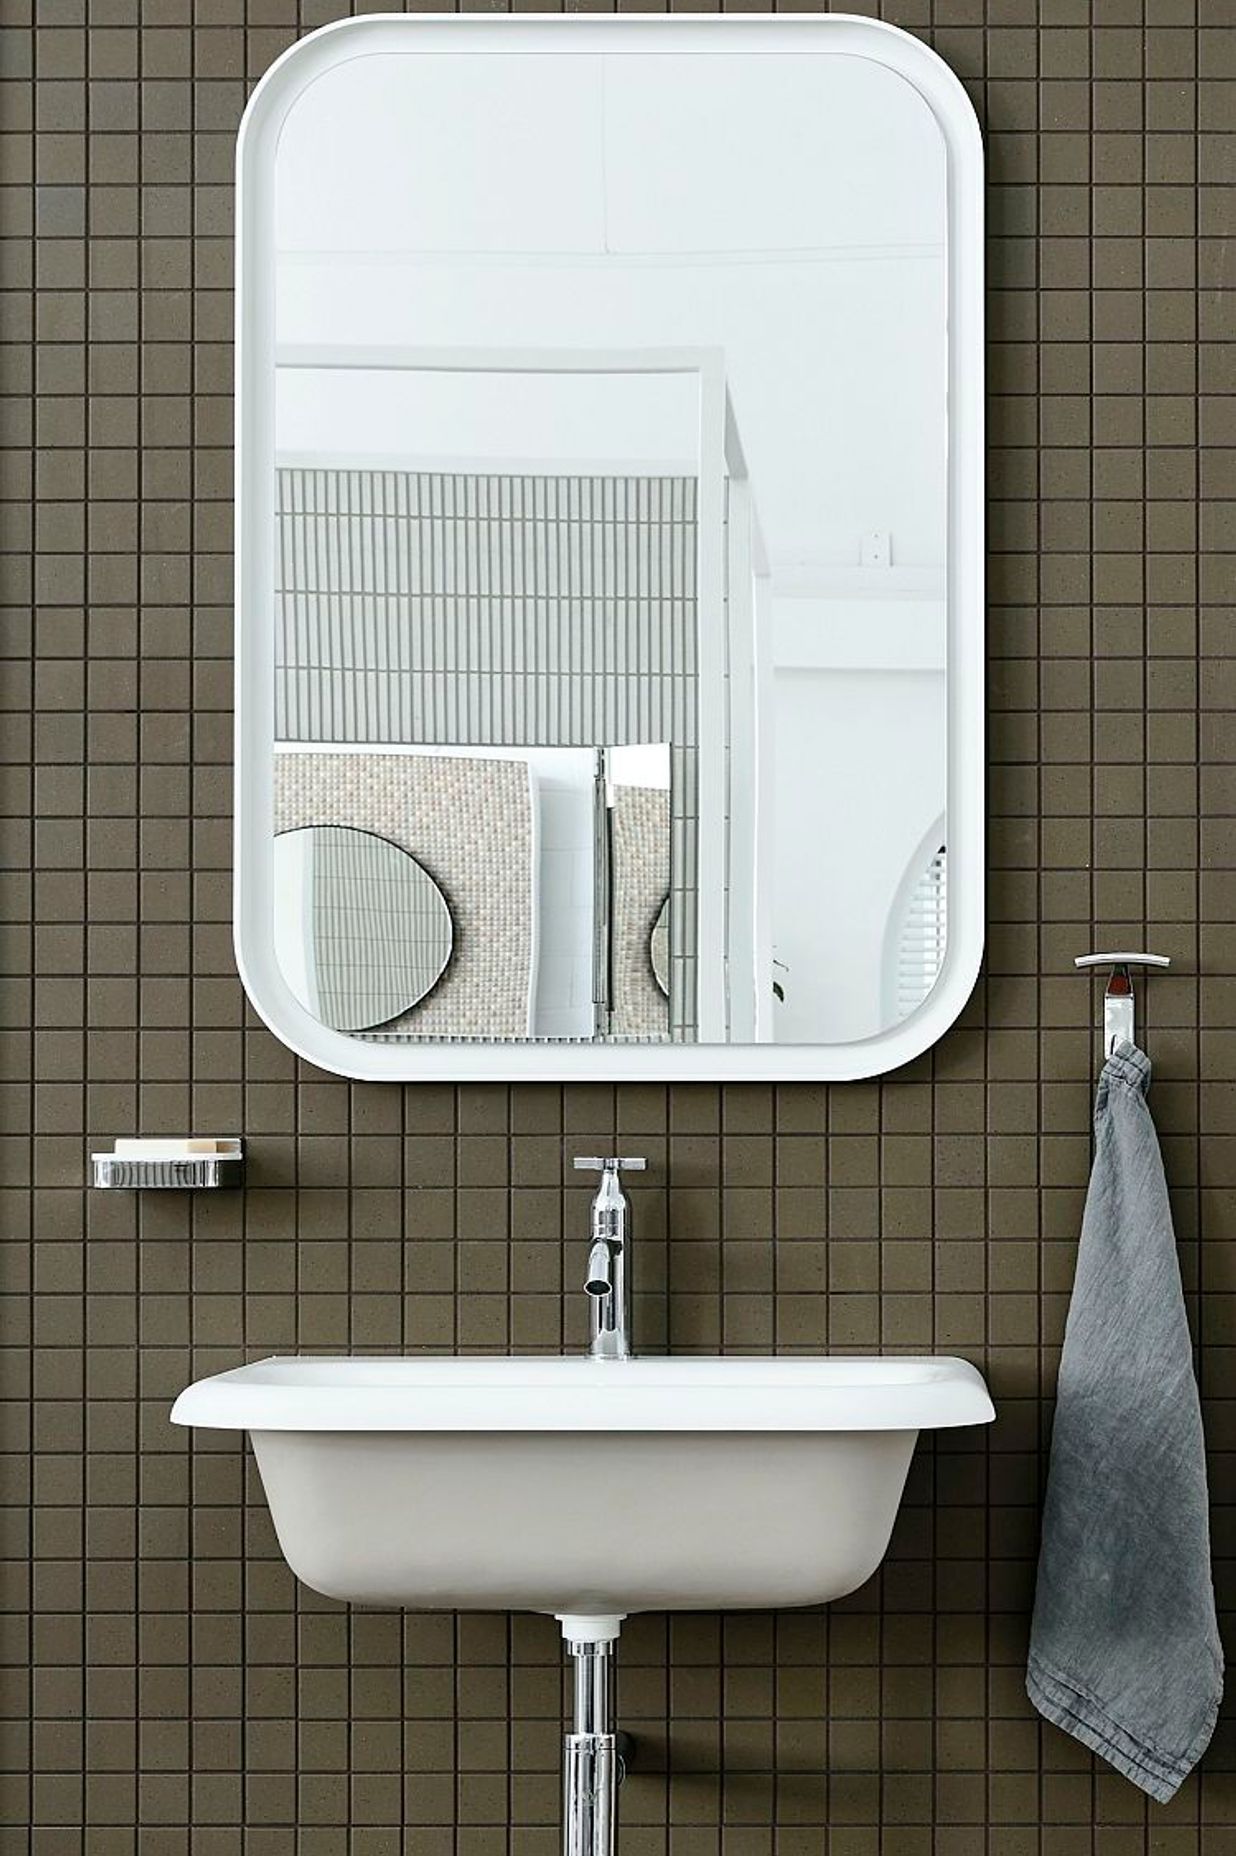 INAX Sugie Series S7736 Hanten mosaic with Agape Ottocento basin, Memory Mirror, tapware and accessories